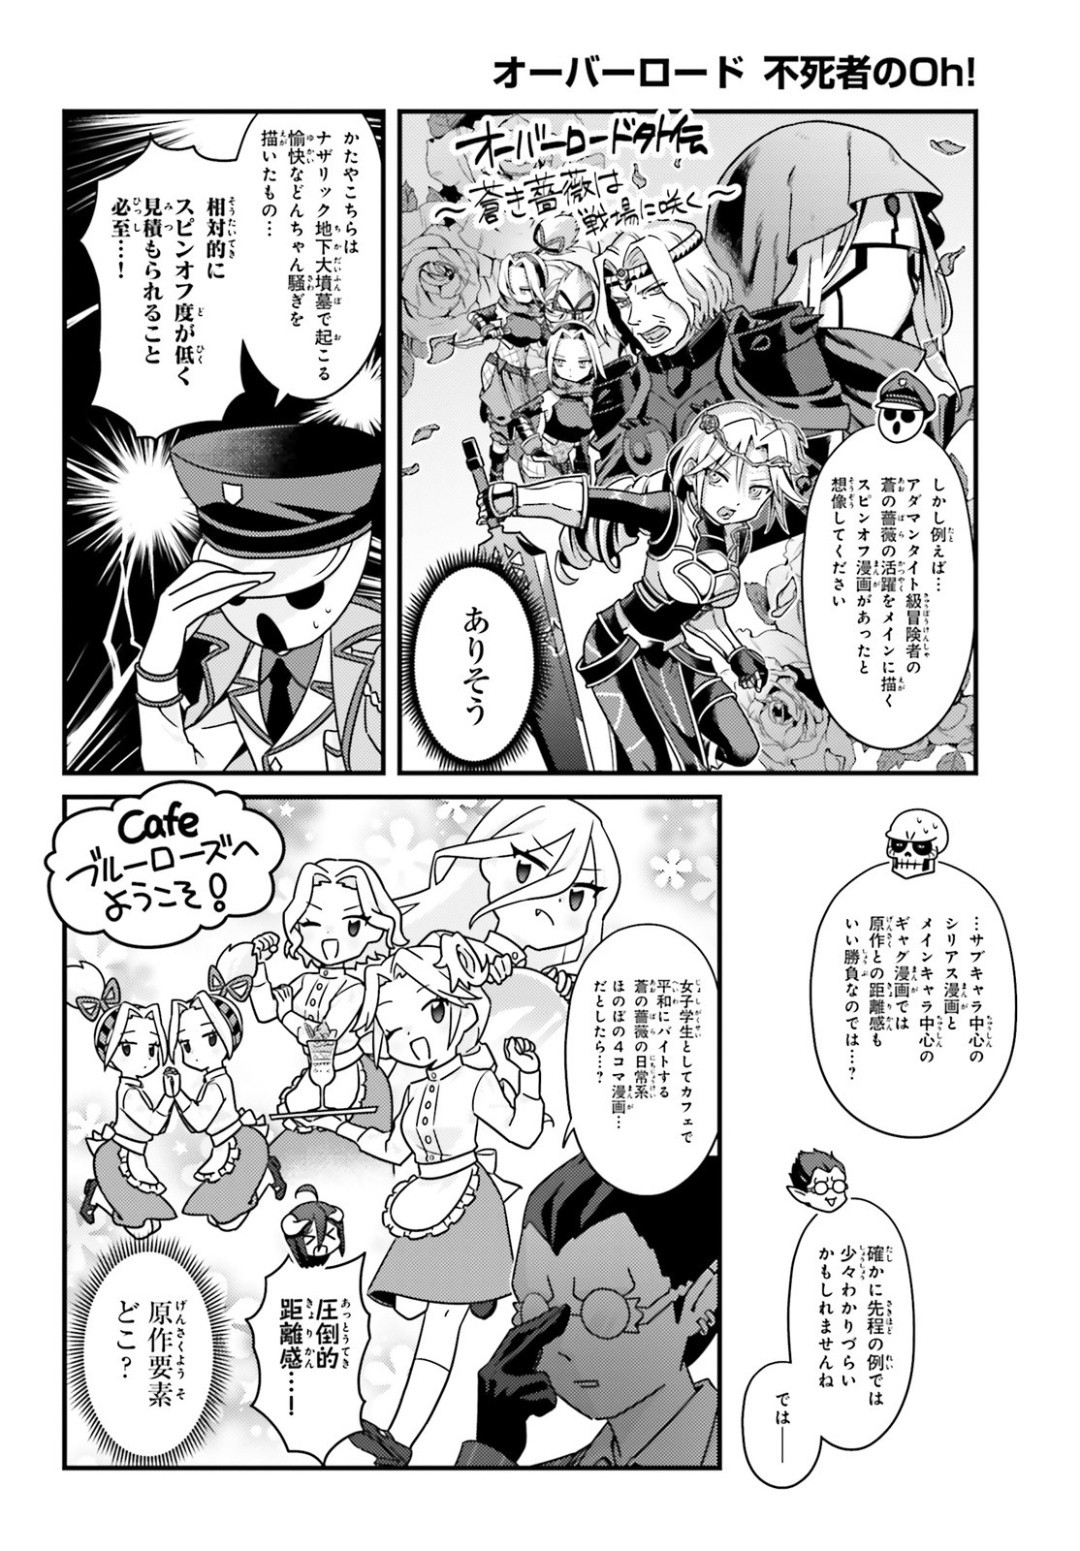 Overlord-Fushisha-no-Oh - Chapter 36 - Page 4